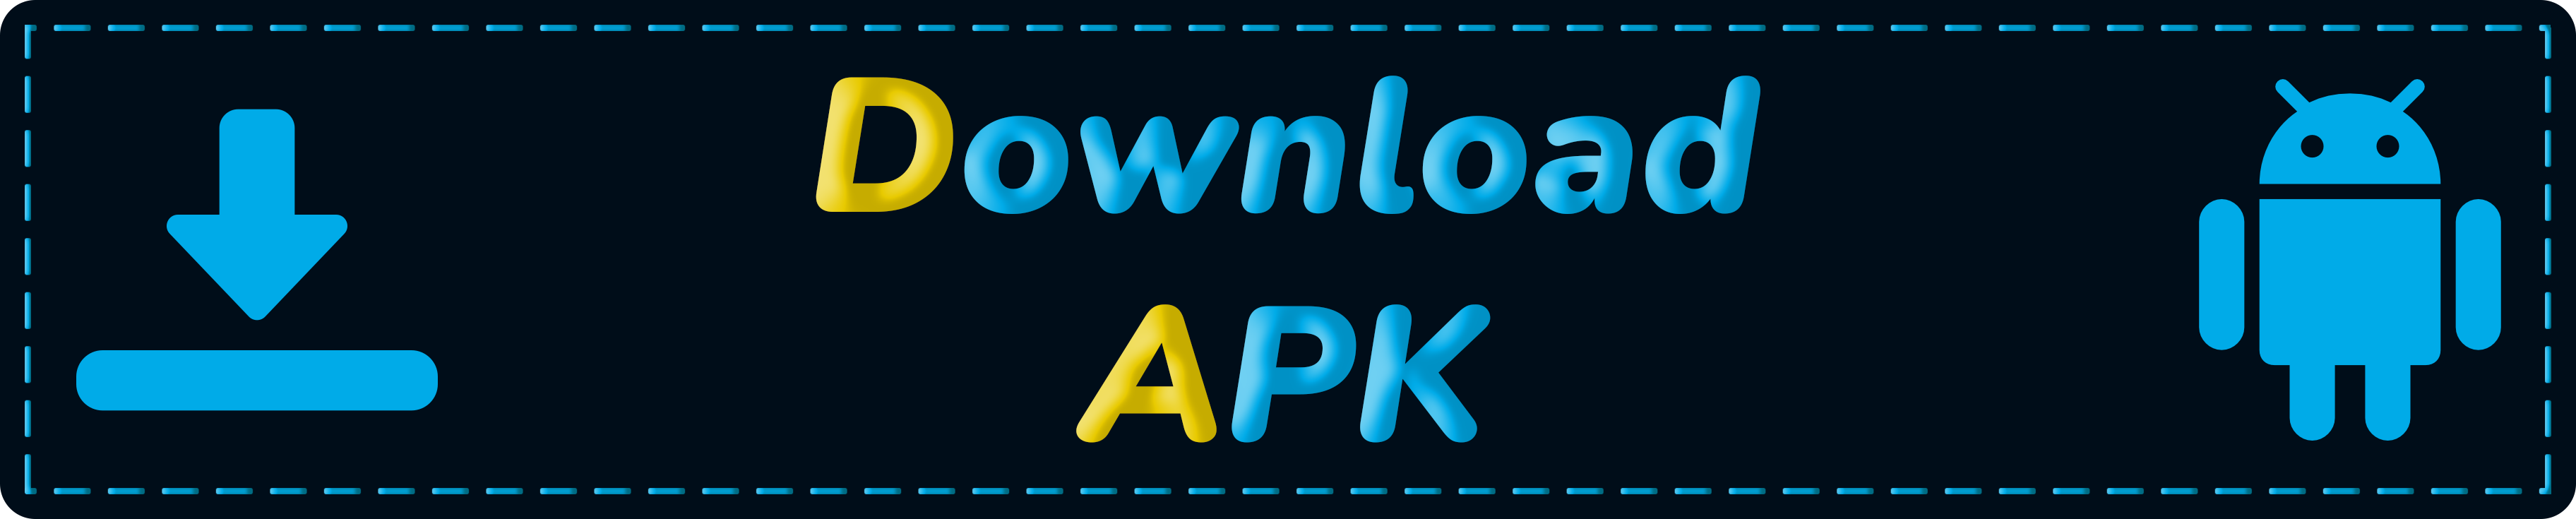 Download Demo APK